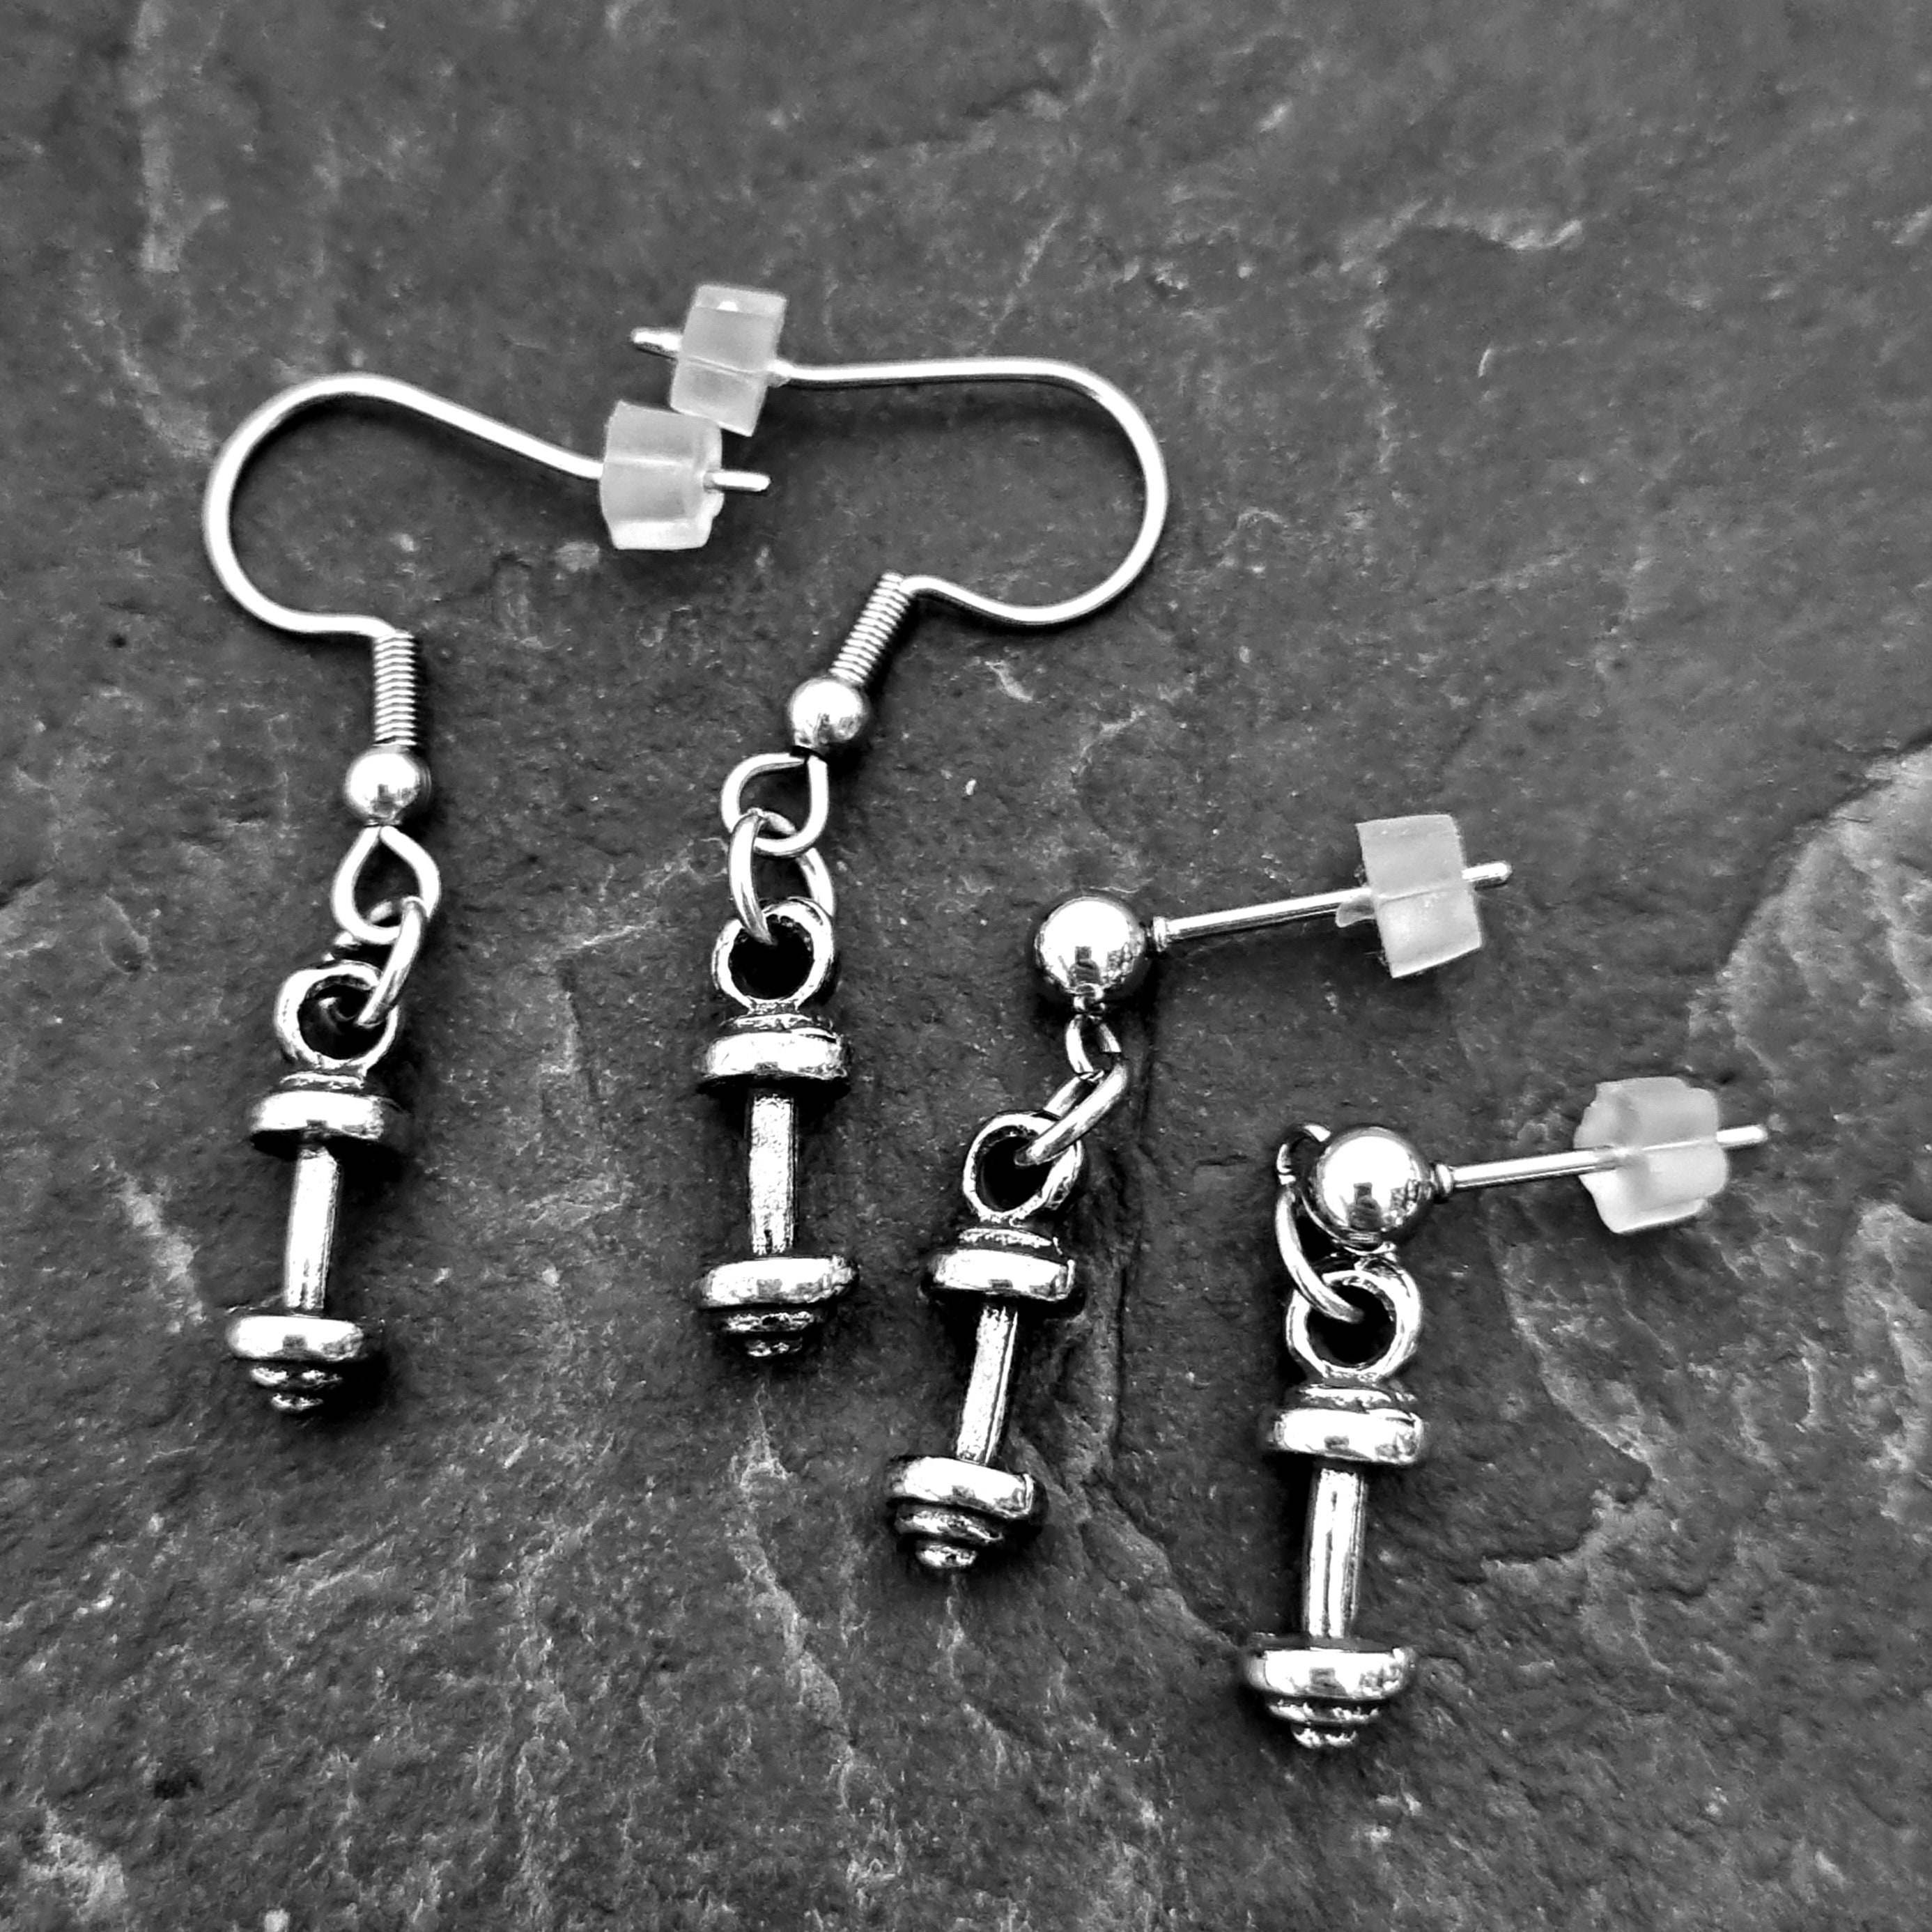 Framework Stud Silver Earrings